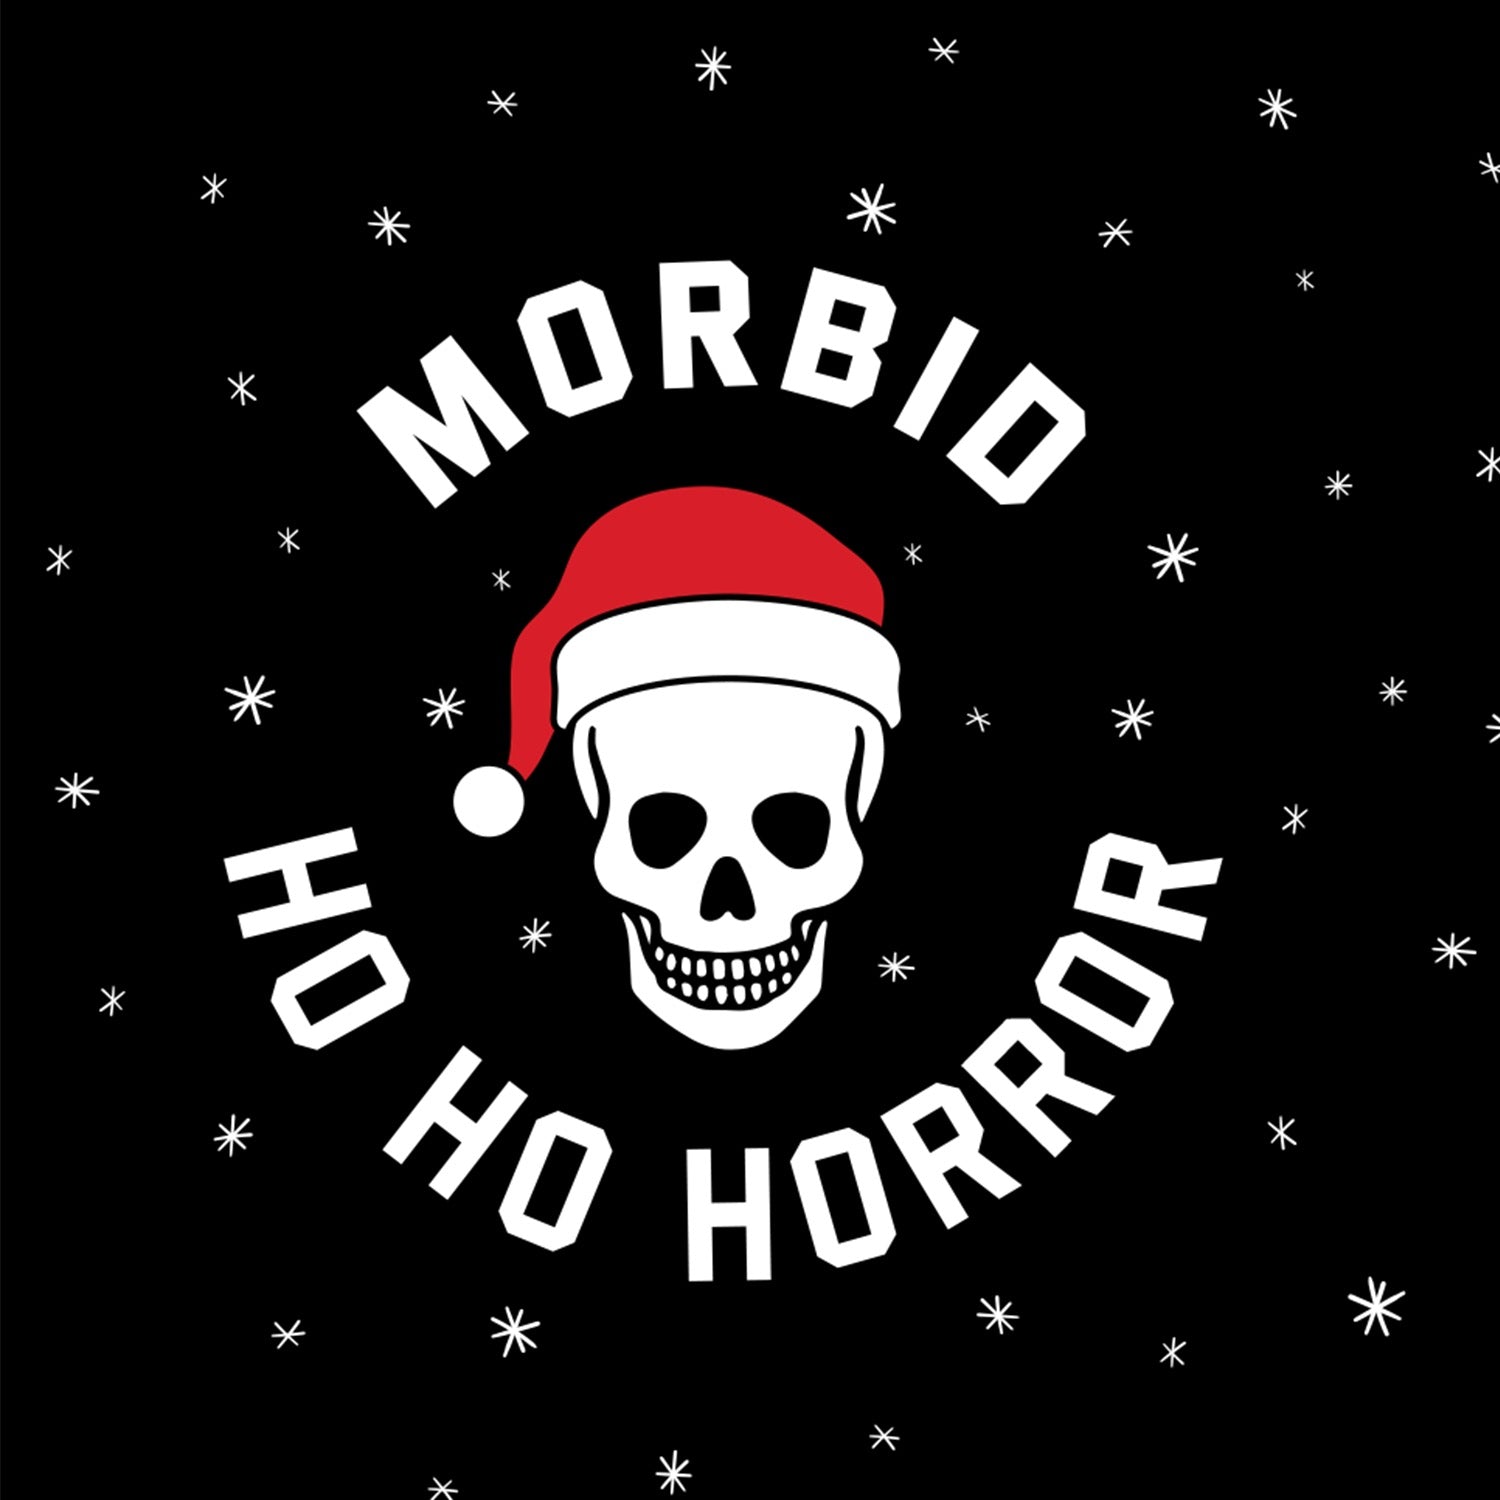 Morbid Ho Ho Horror Personalized Black Mug